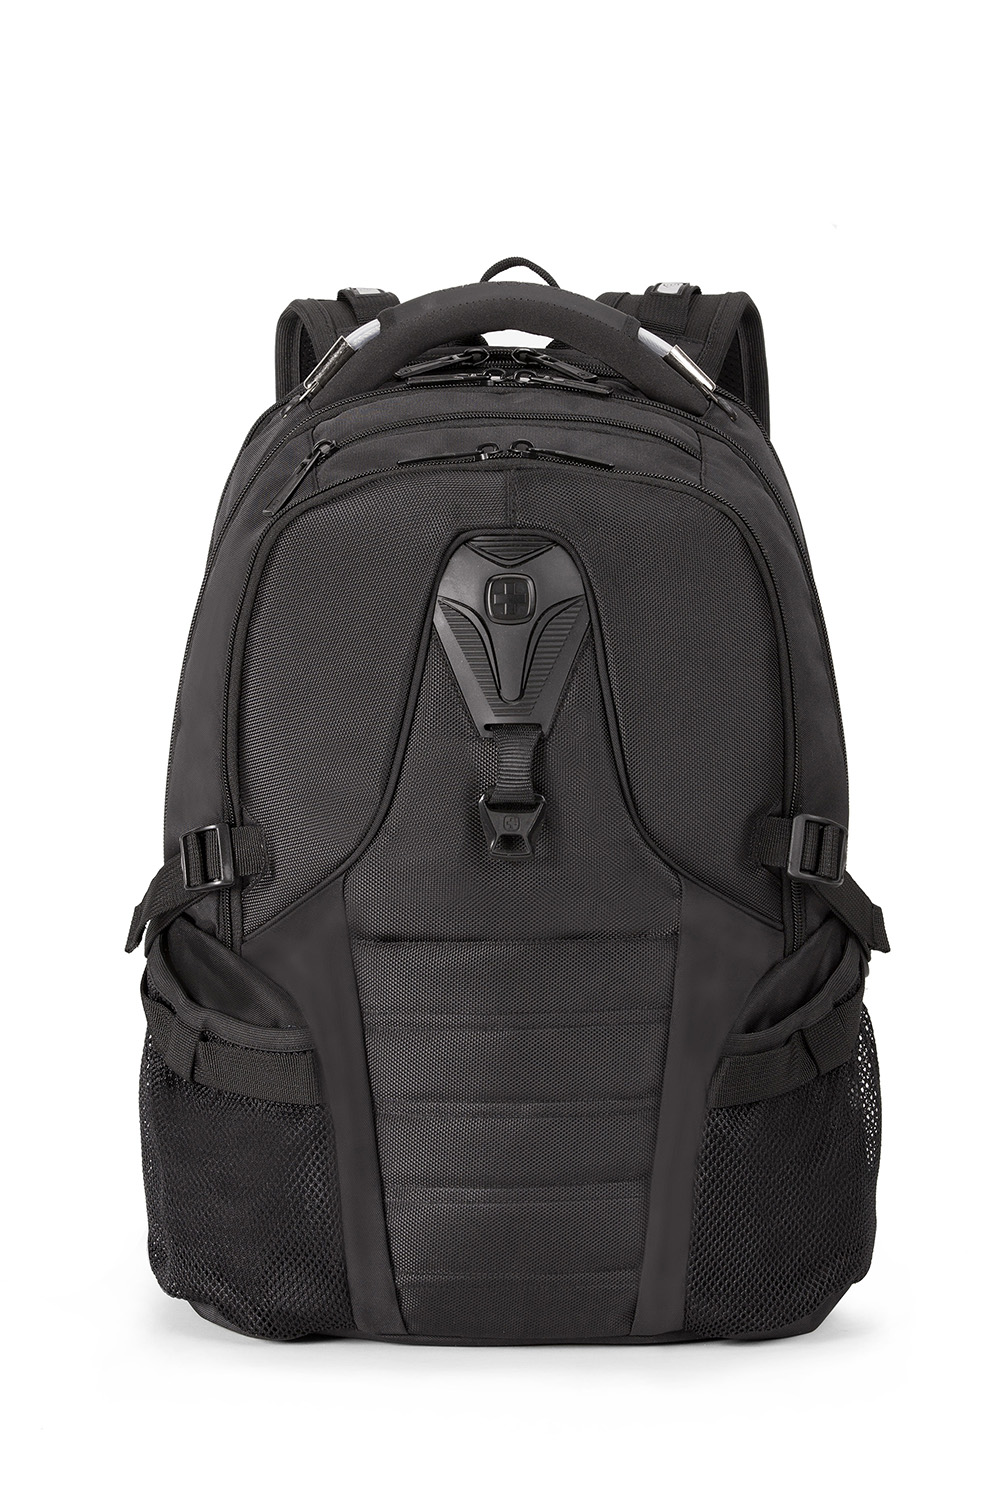 Swissgear 5312 Scansmart Laptop Backpack - Black Stealth